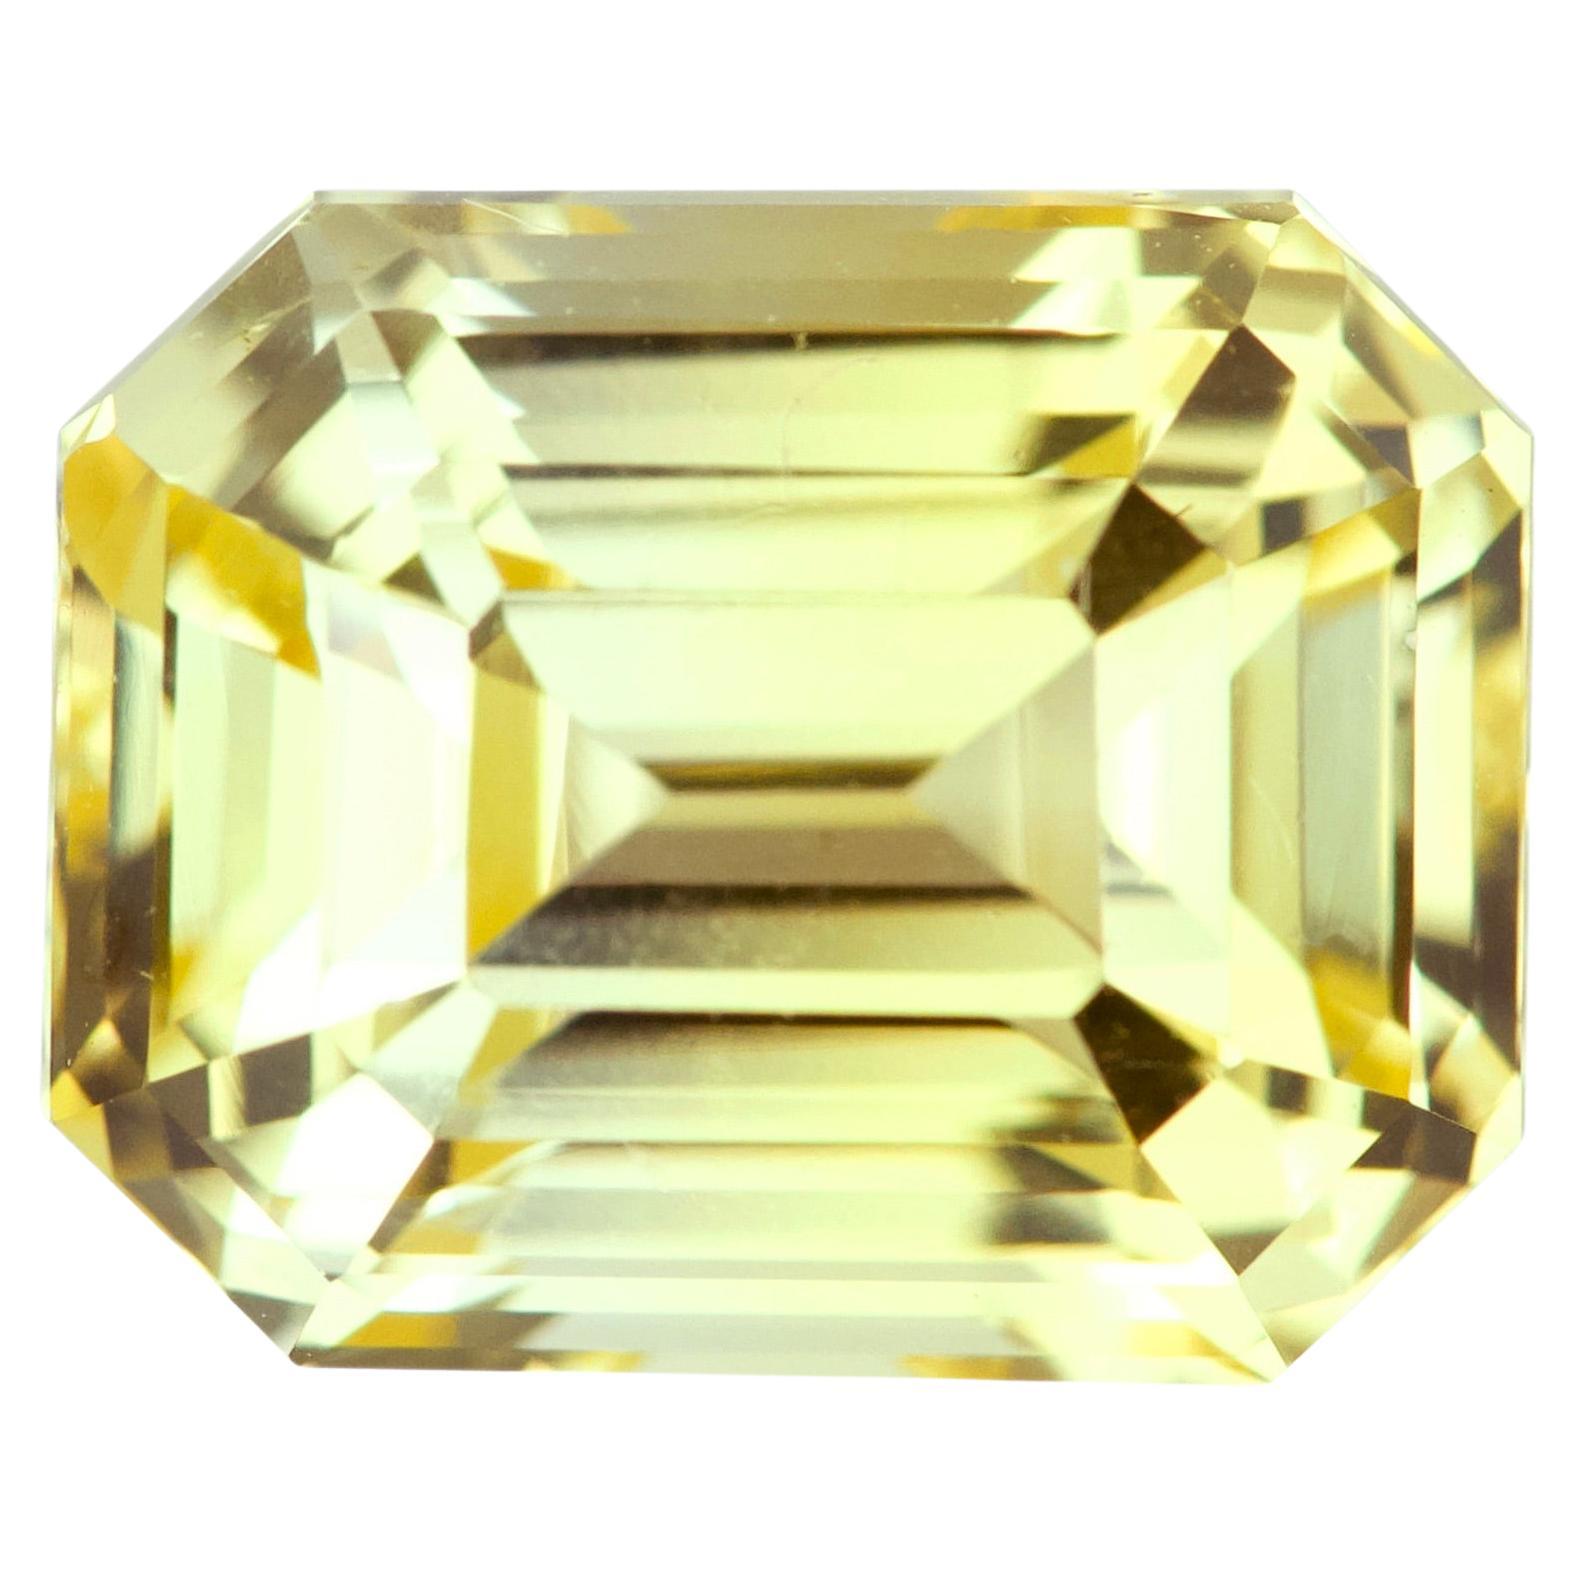 Vivid Yellow 5.09ct Sapphire Emerald Cut Natural Unheated, Loose Gemstone